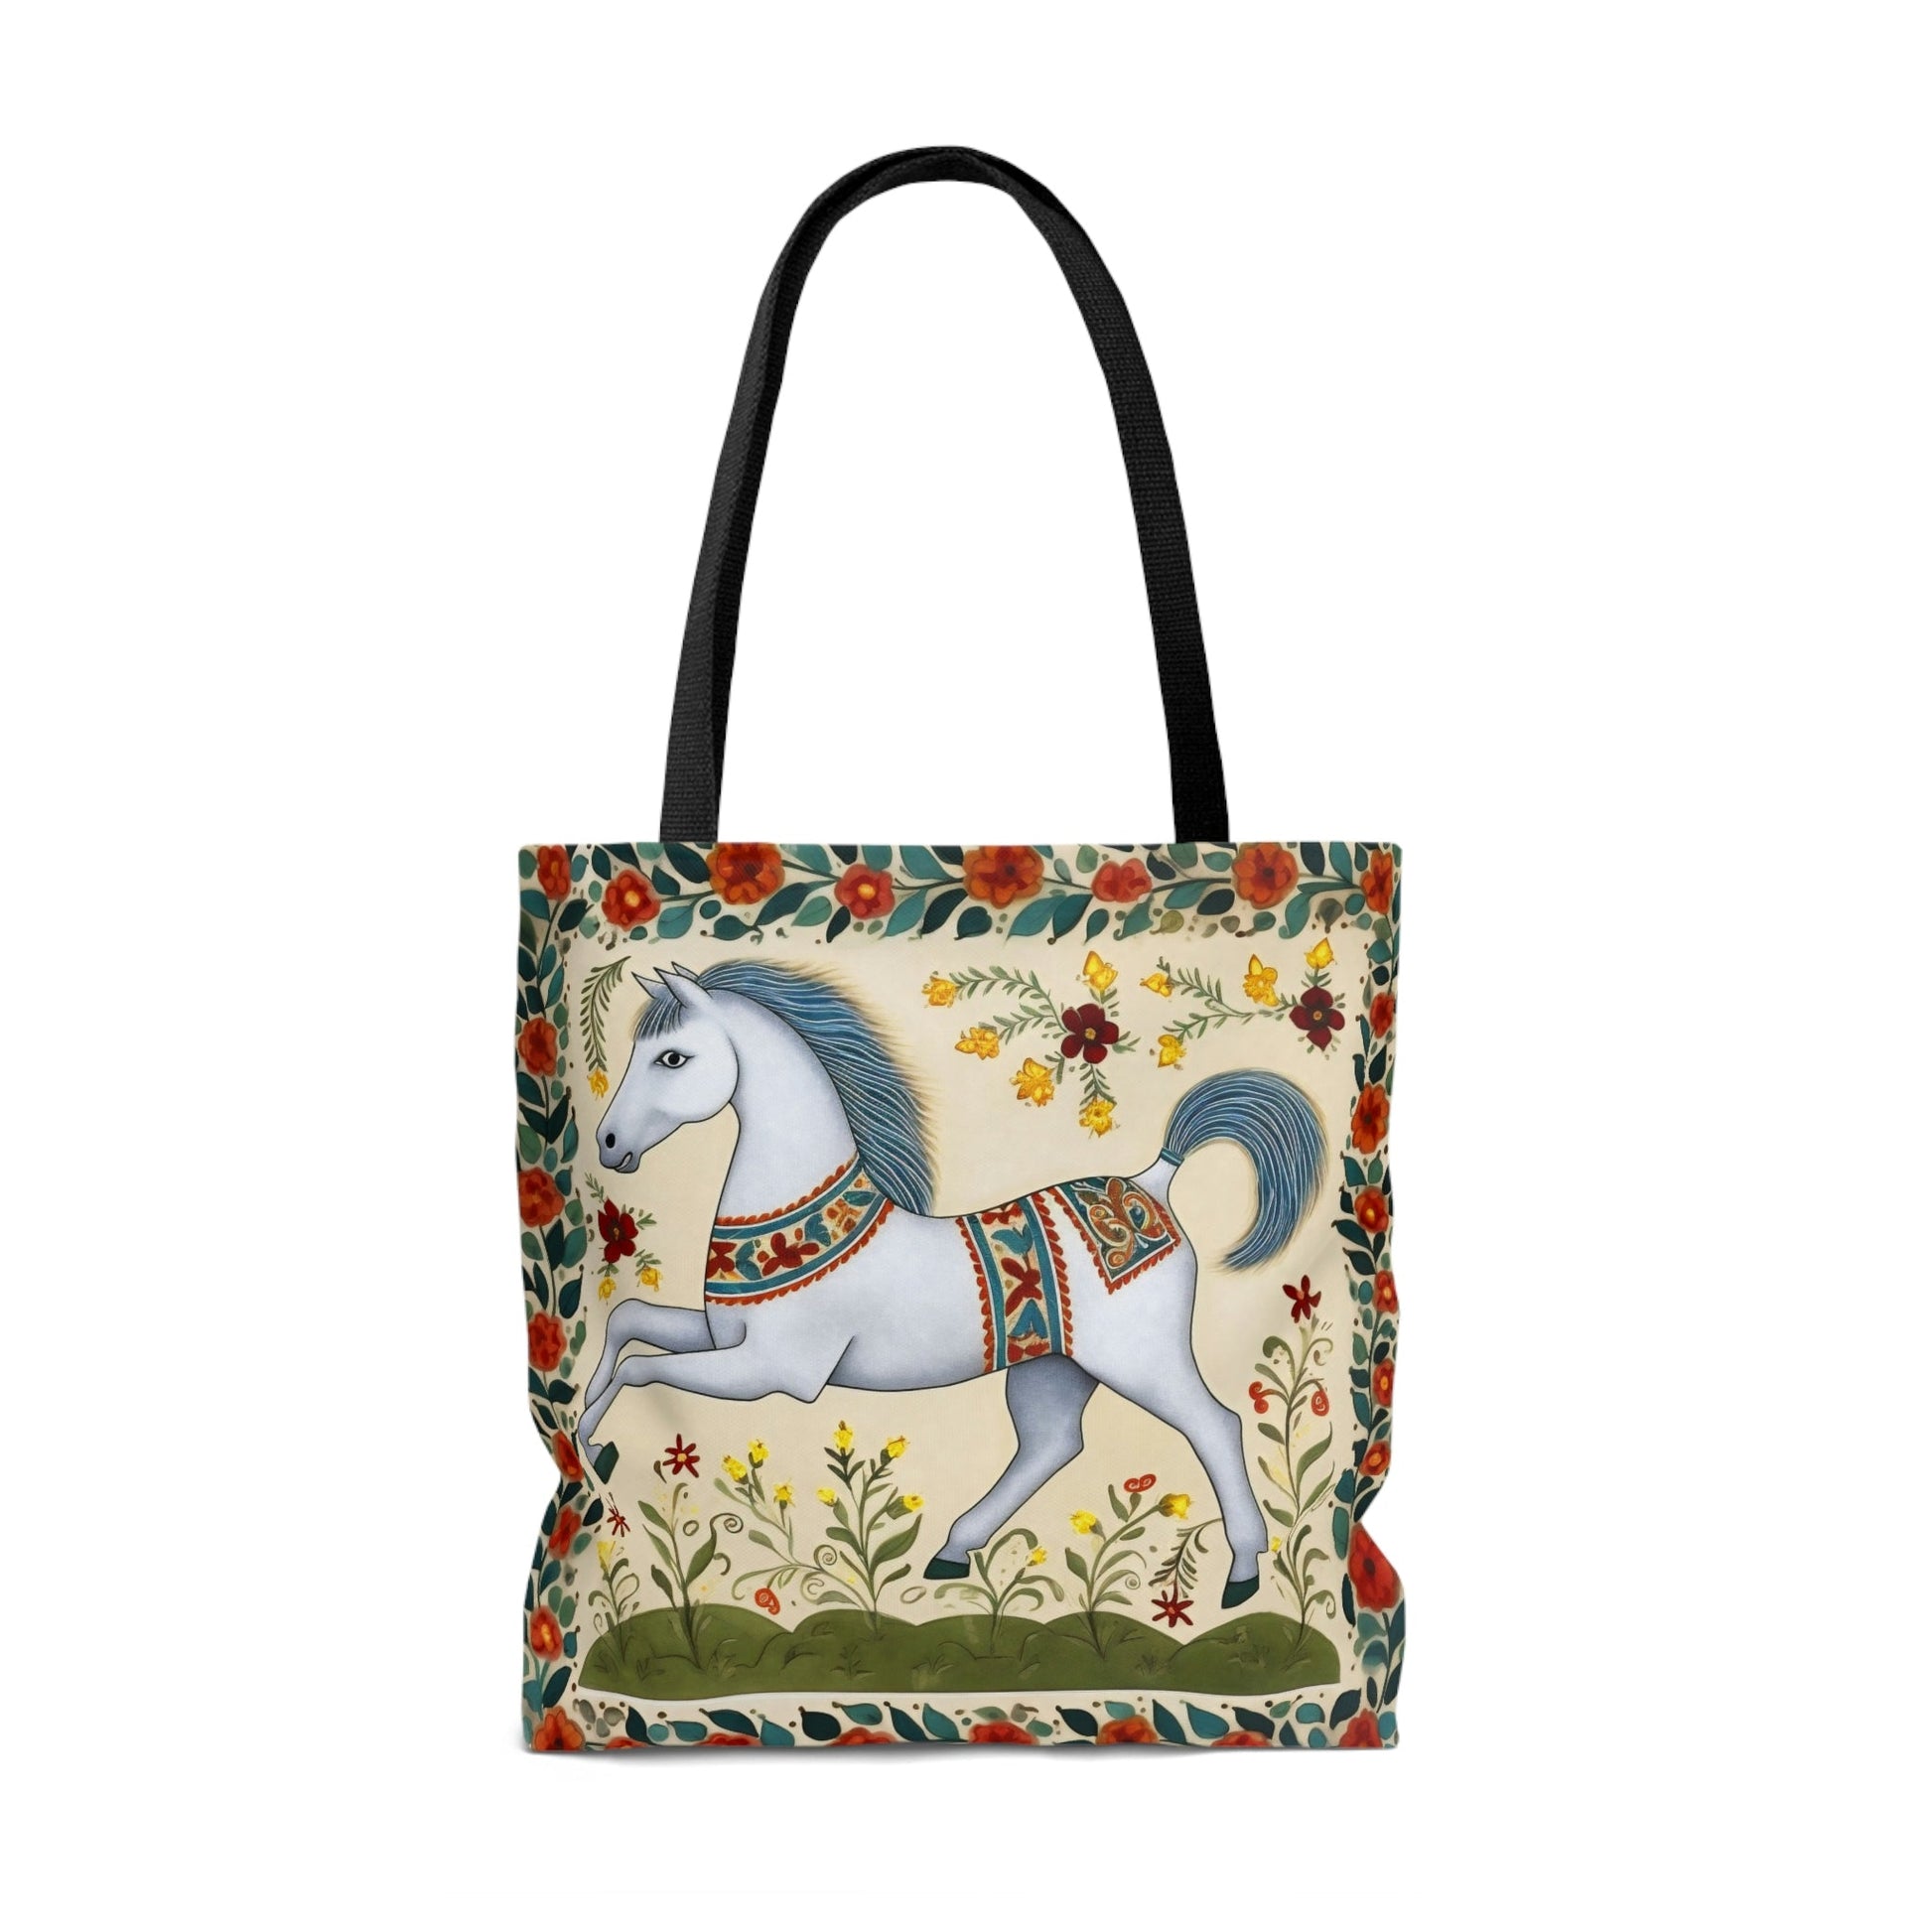 Folk Art White Horse Tote Bag - Cute Cottagecore Totebag Makes the Perfect Gift